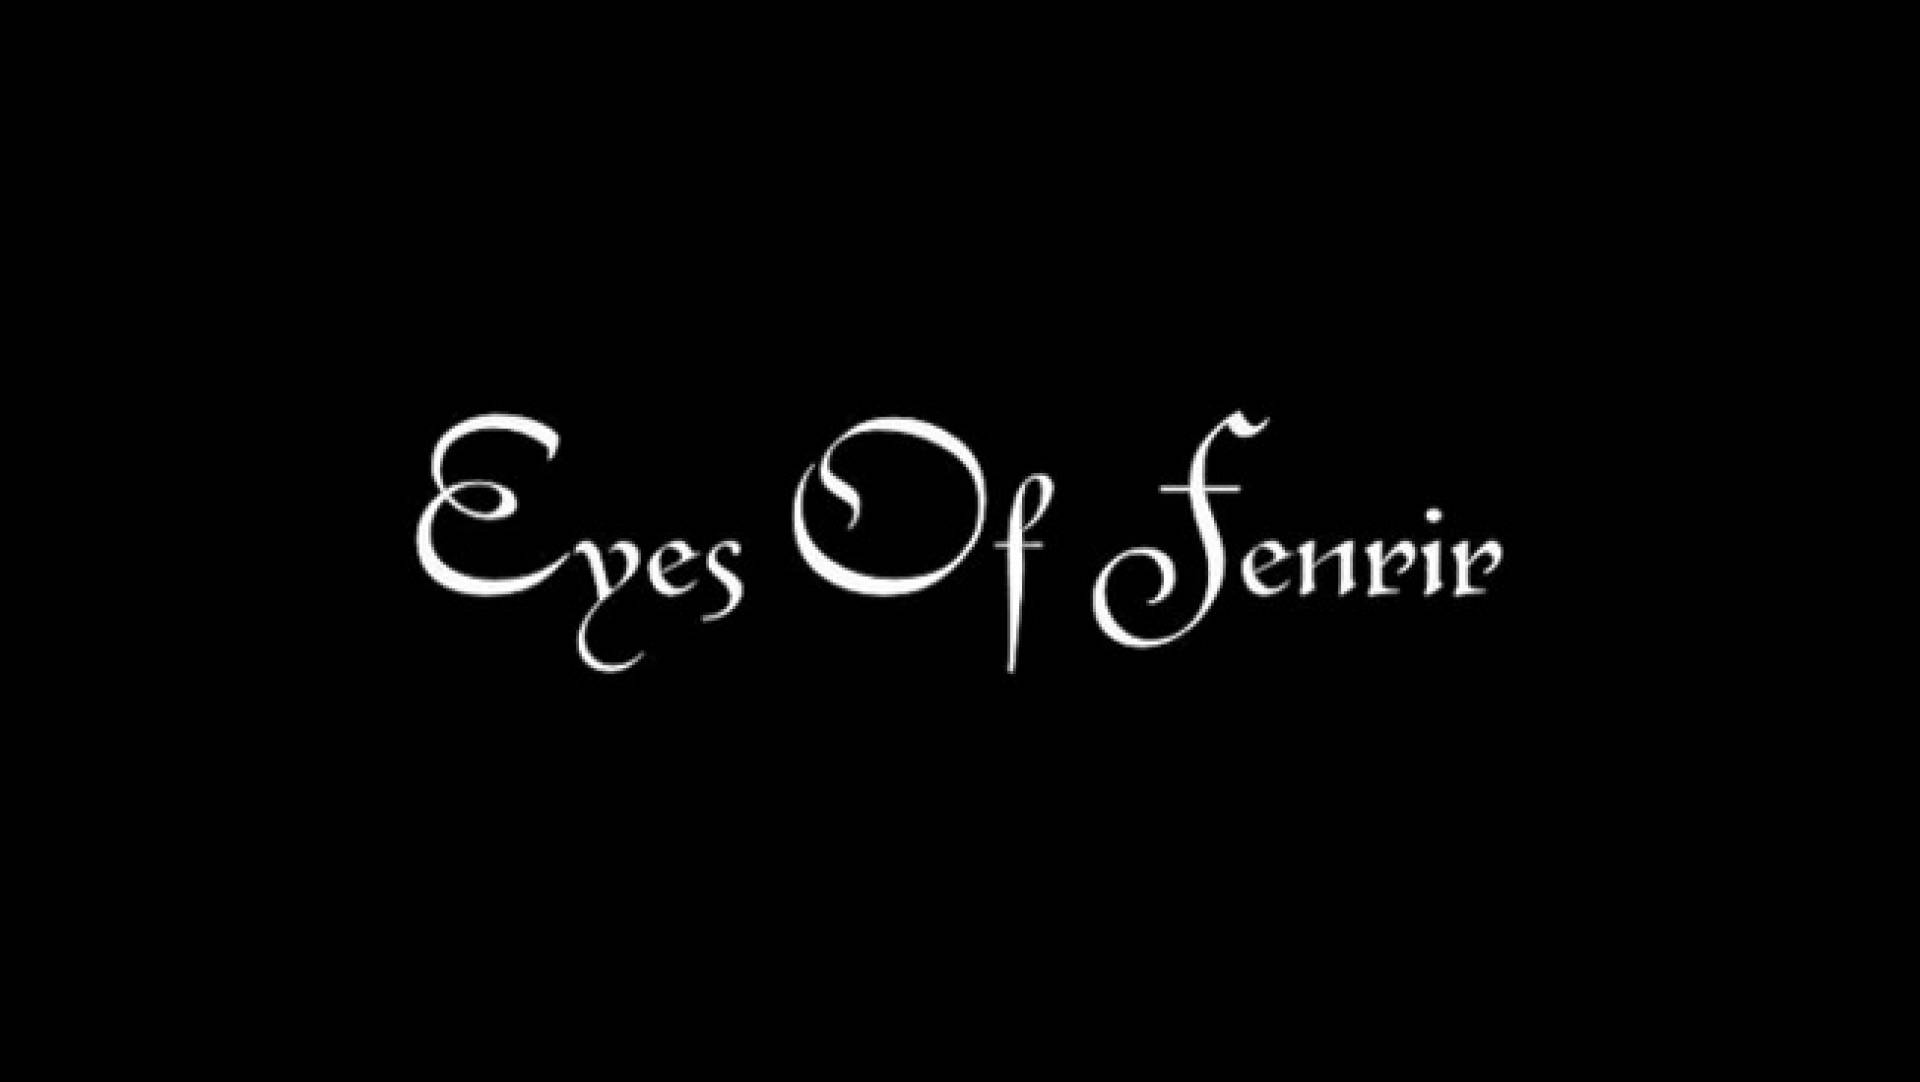 Eyes Of Fenrir